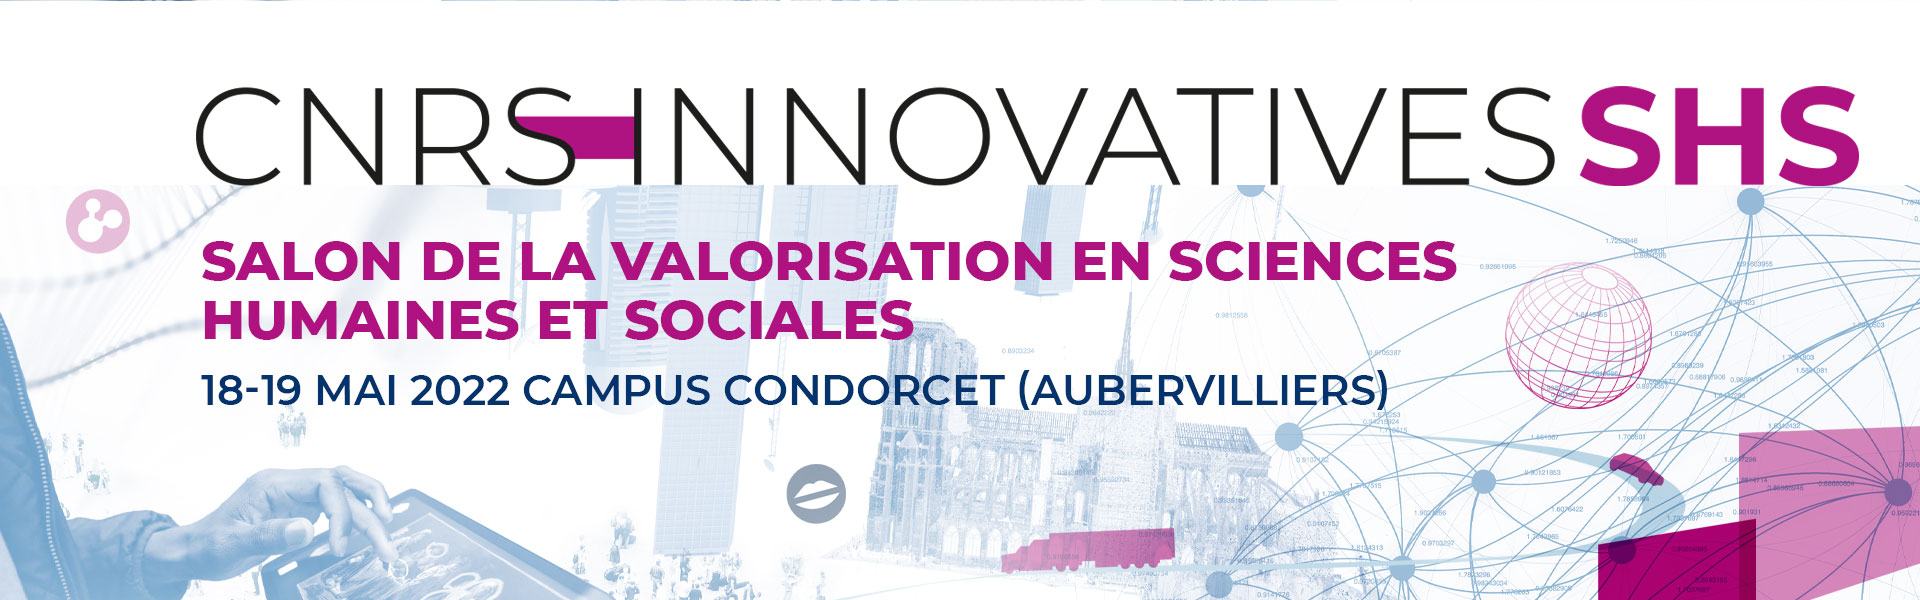 Innovative SHS 2022 au Campus Condorcet